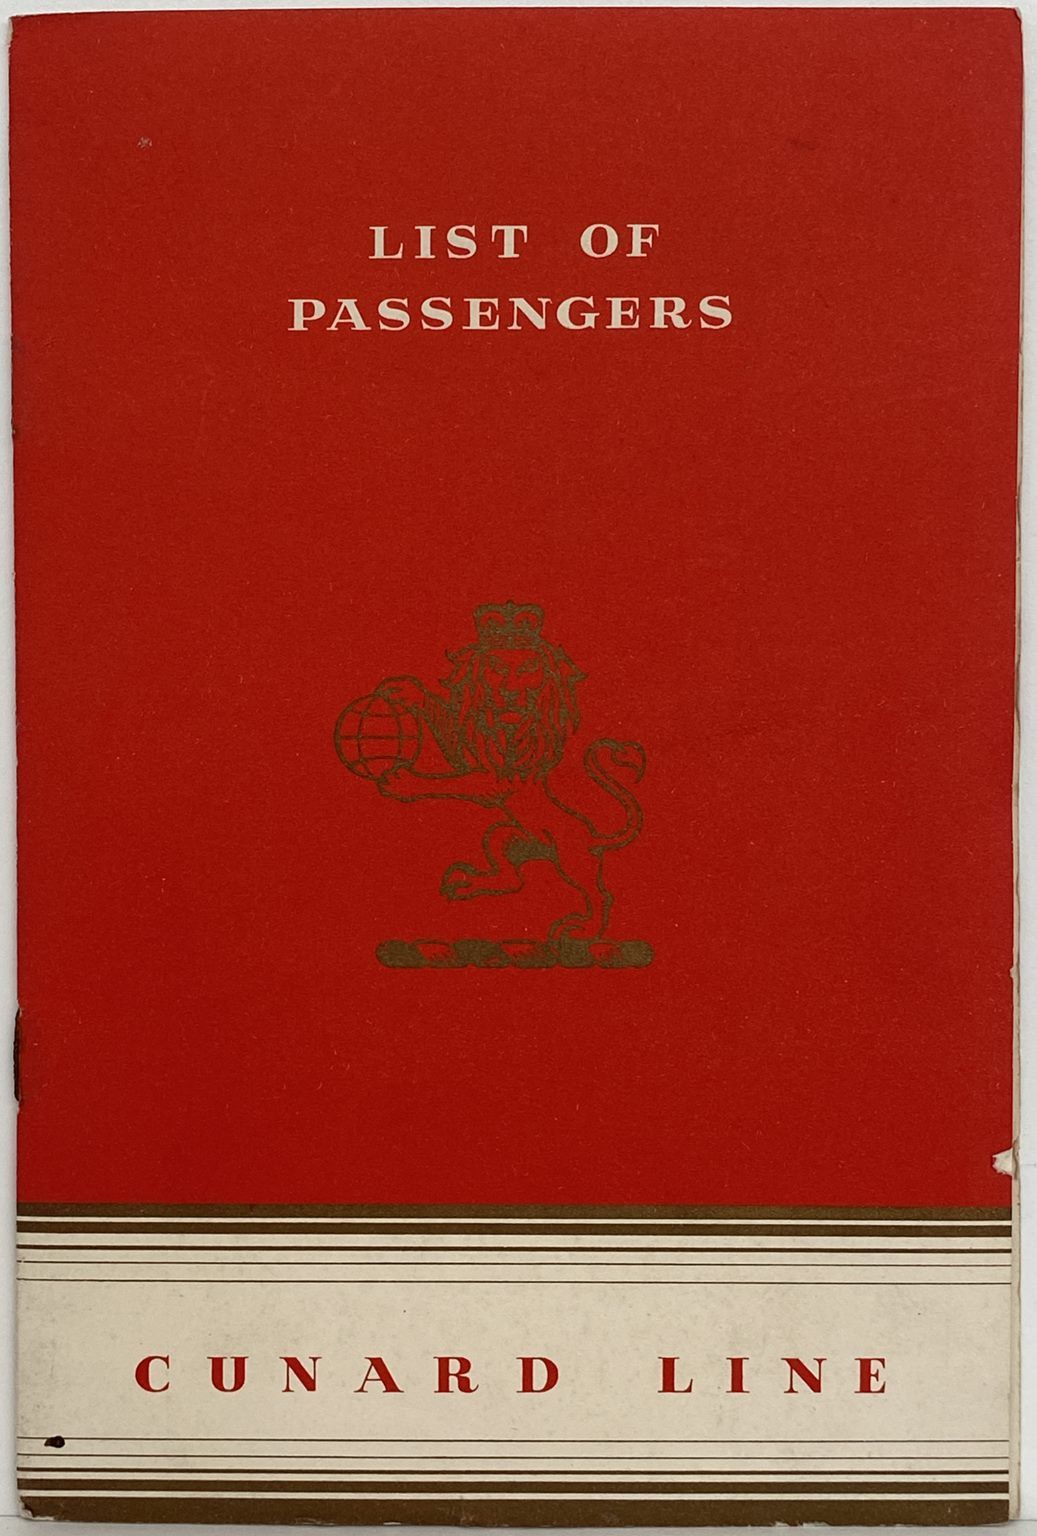 MARITIME MEMORABILIA: Cunard Line - List of Passengers R.M.S Media June 1951